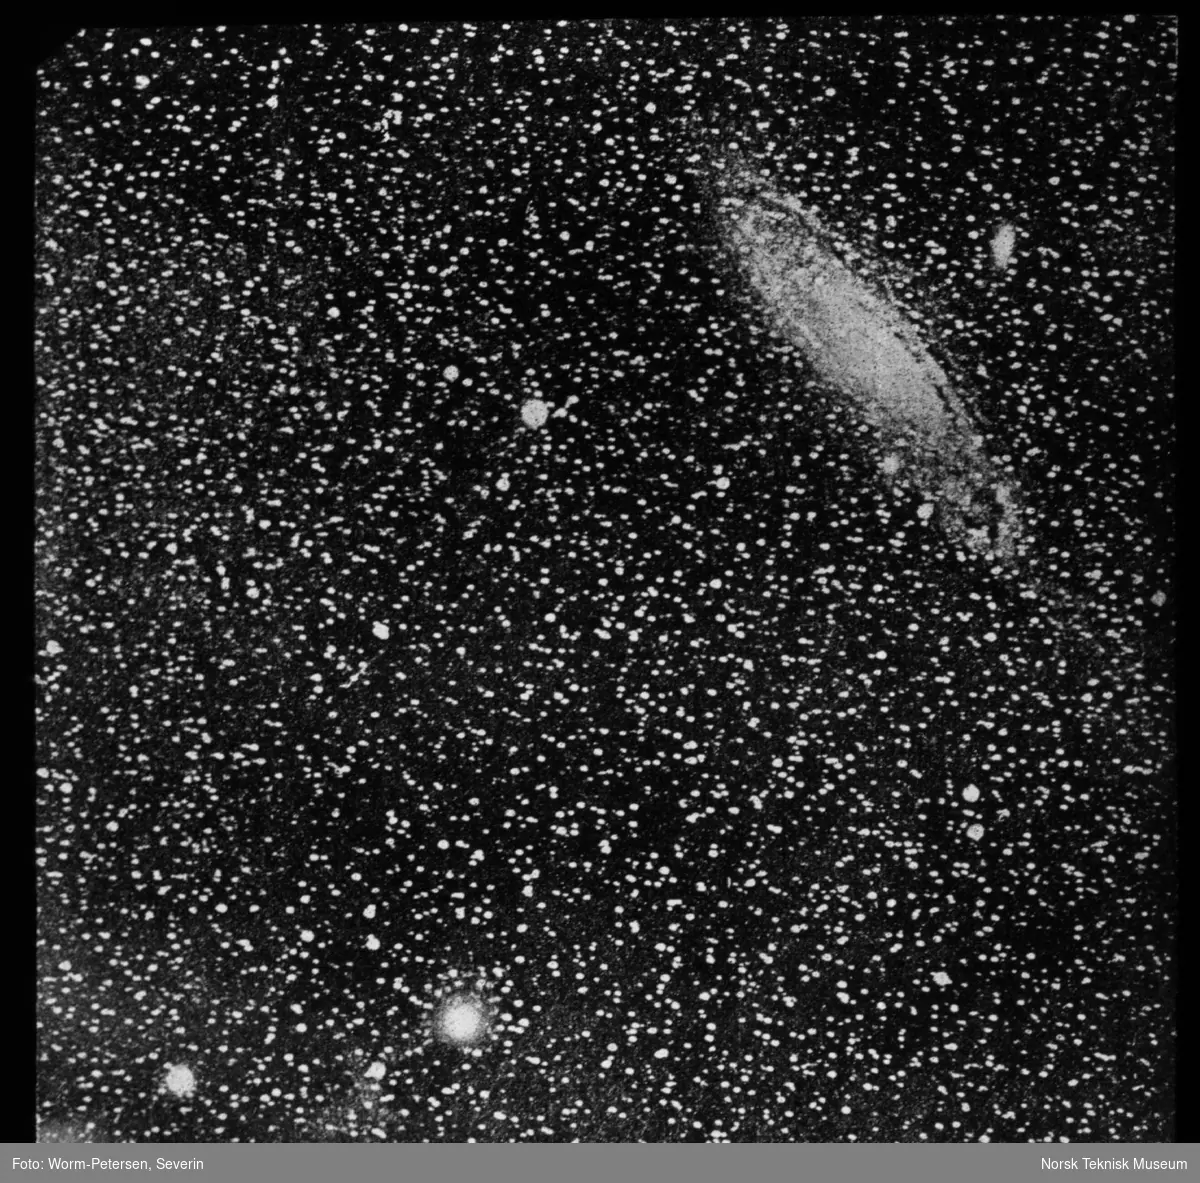 Komet, Holmes fotograferte 1892